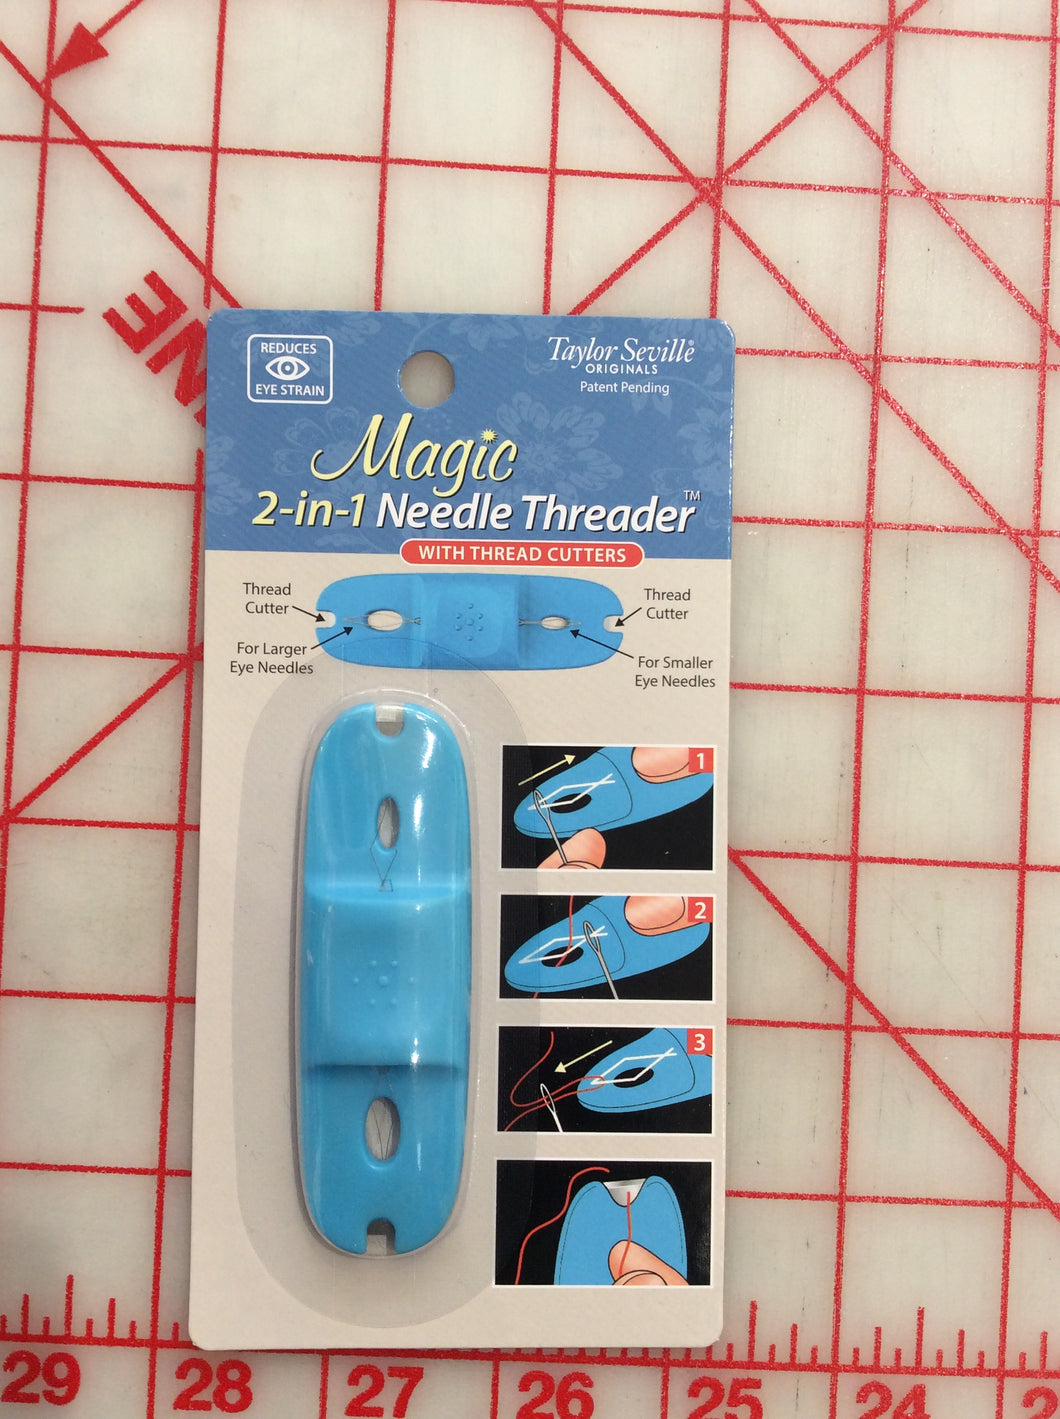 Magic 2-in-1 Needle Threader